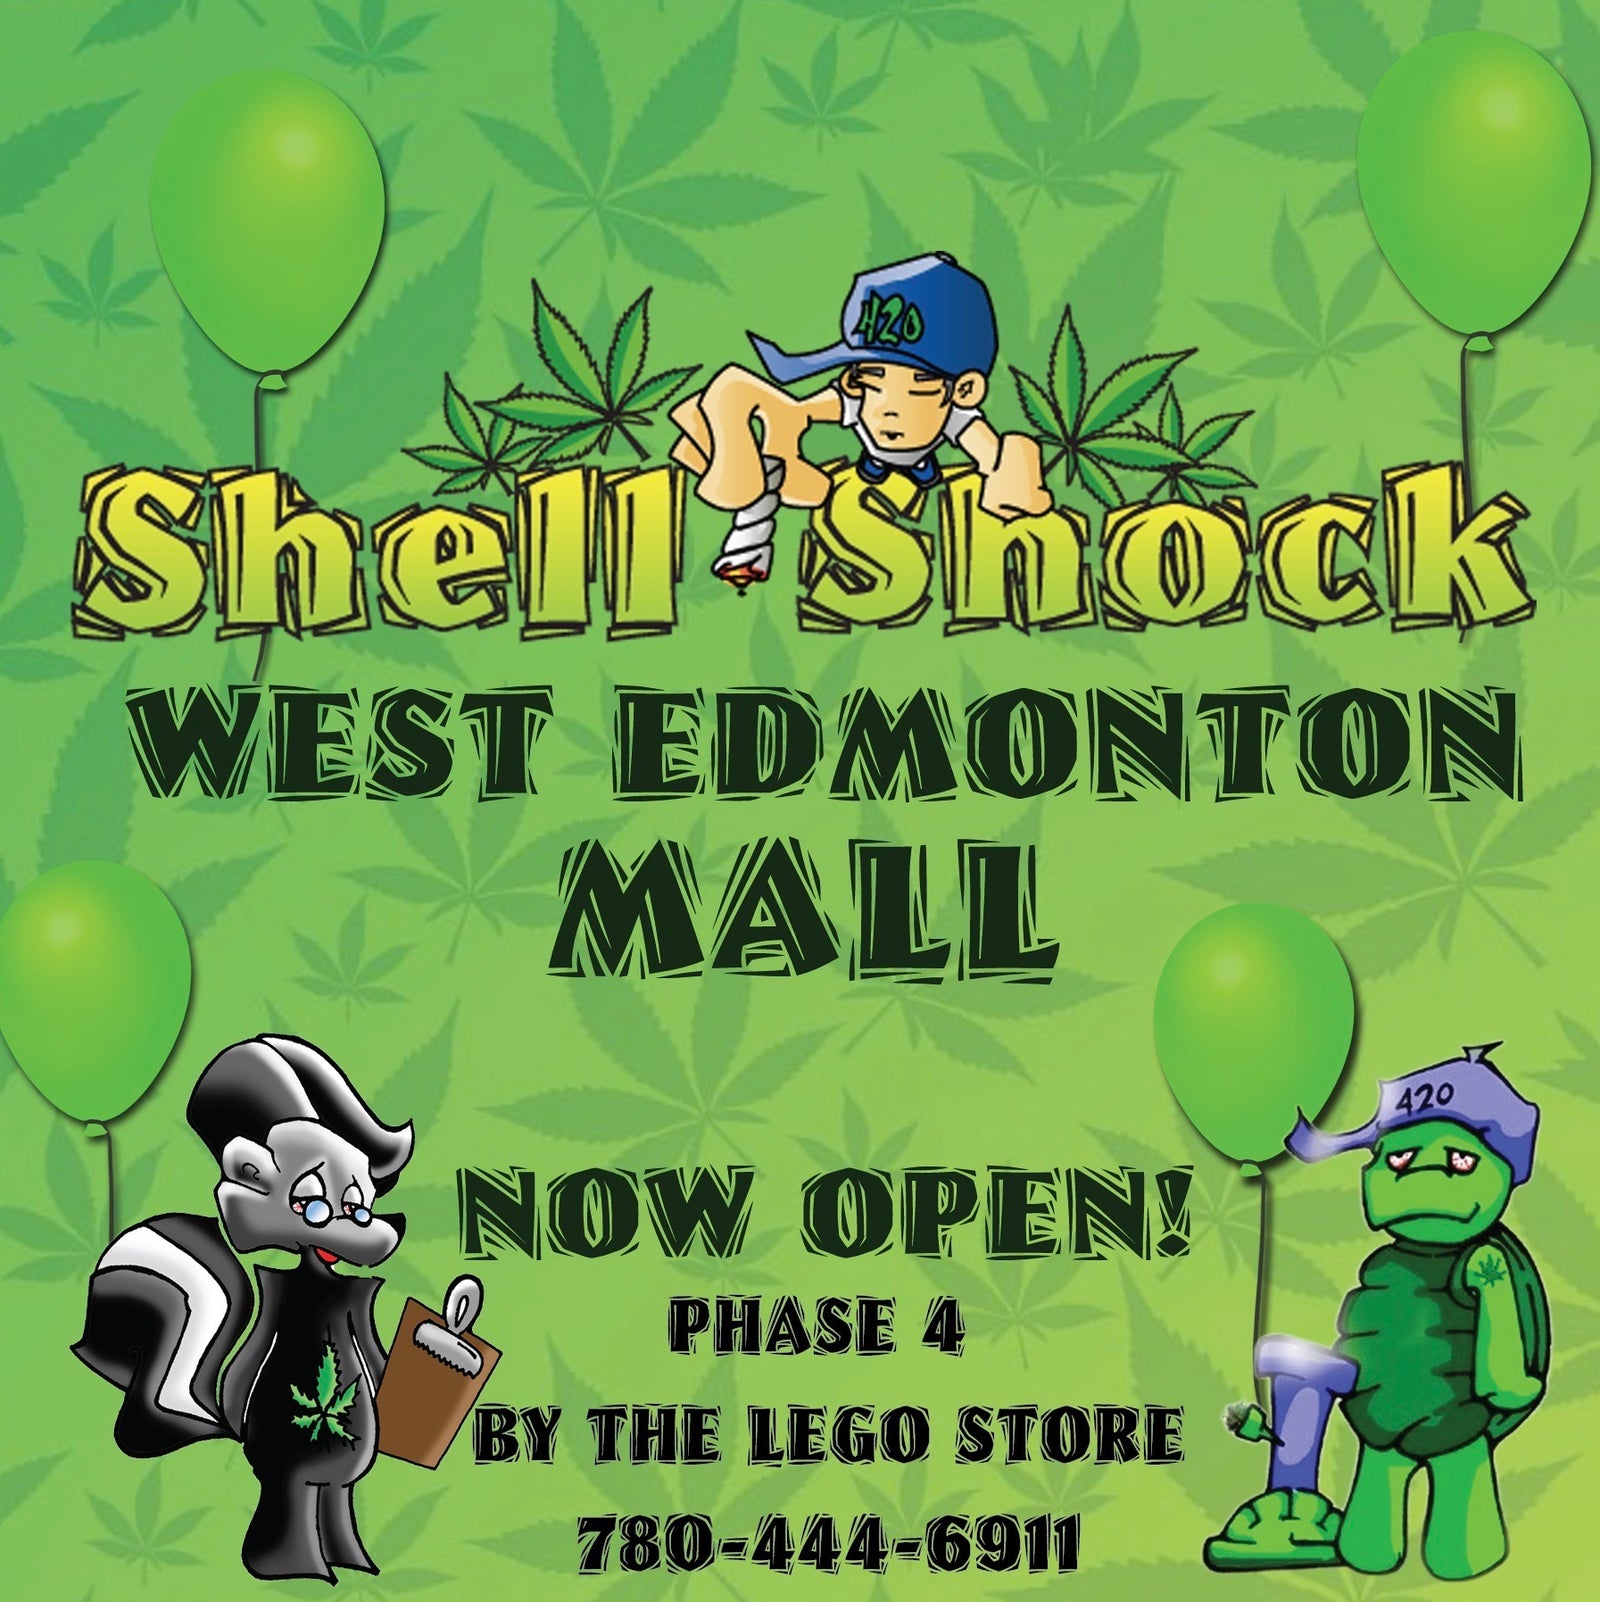 Shell Shock West Edmonton Mall now open